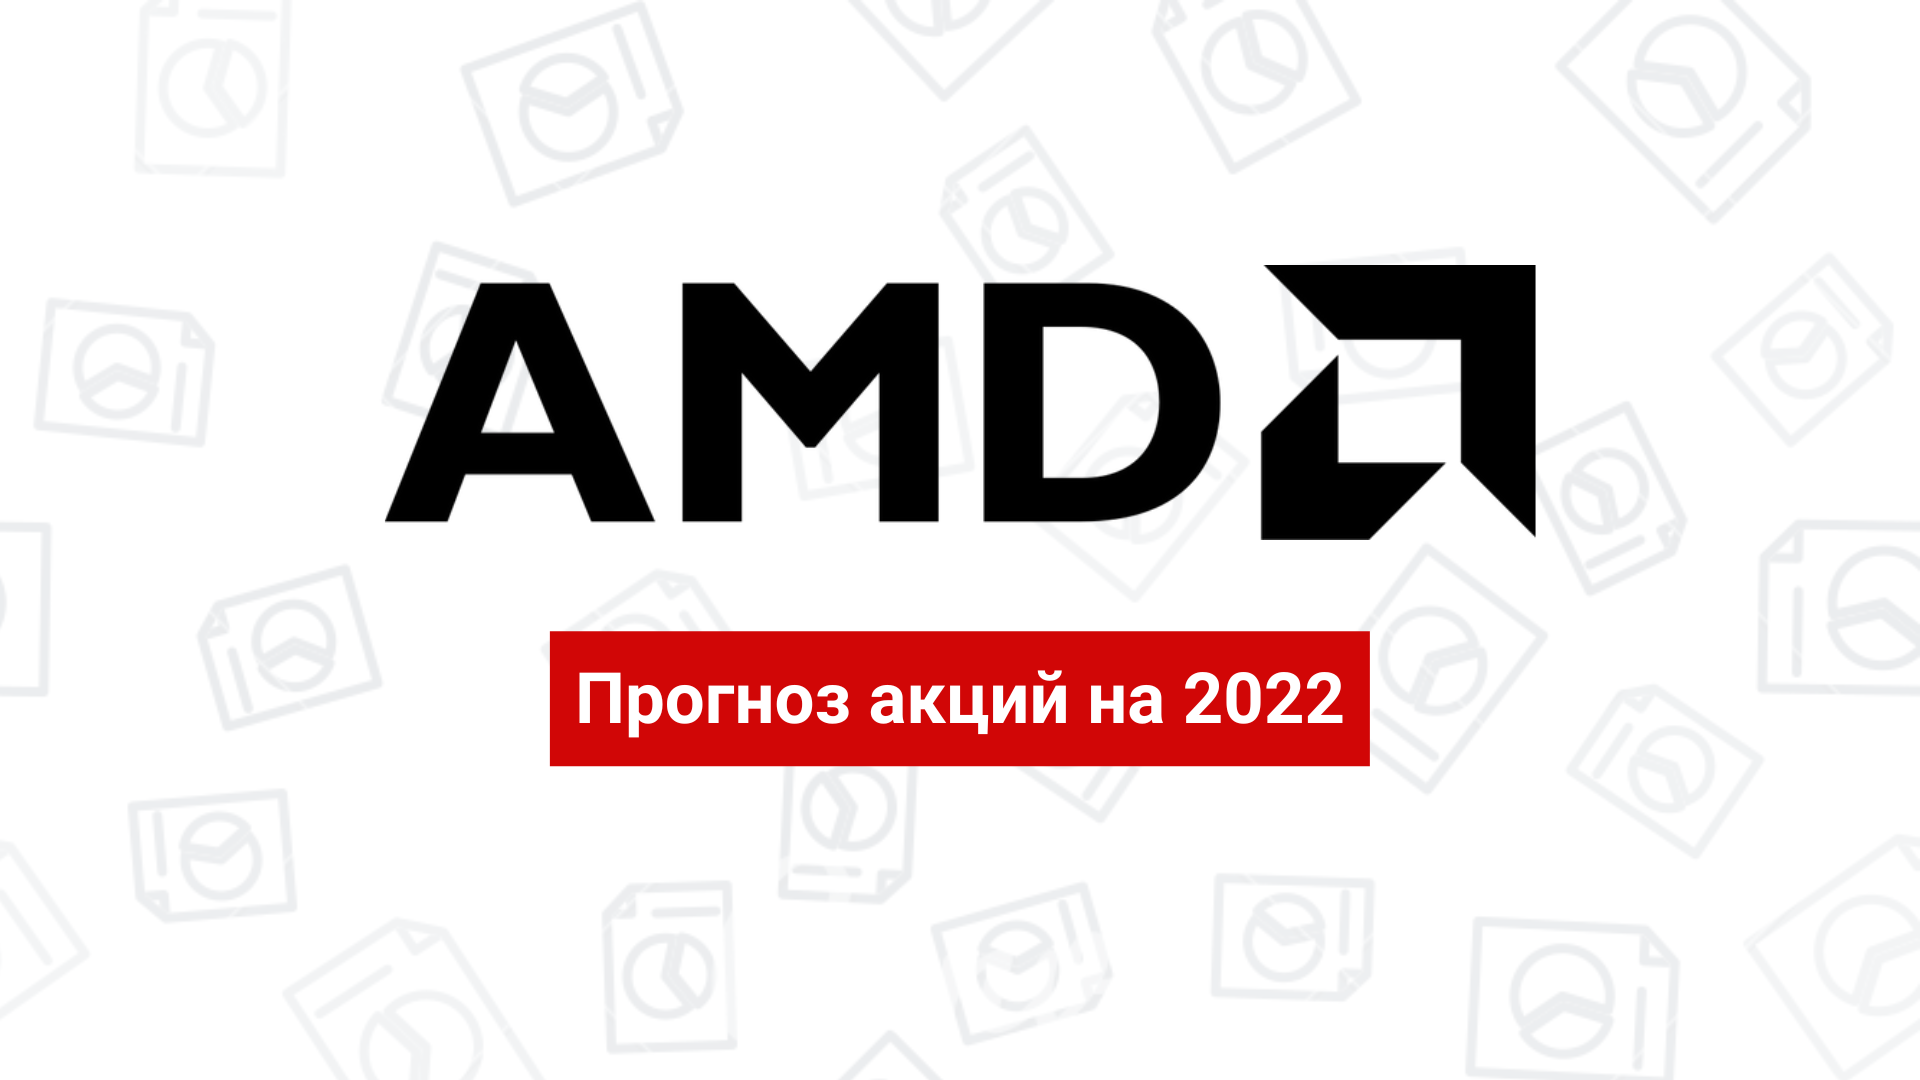 Прогноз акций AMD на 2022 год: мнения аналитиков, консенсус-прогнозы